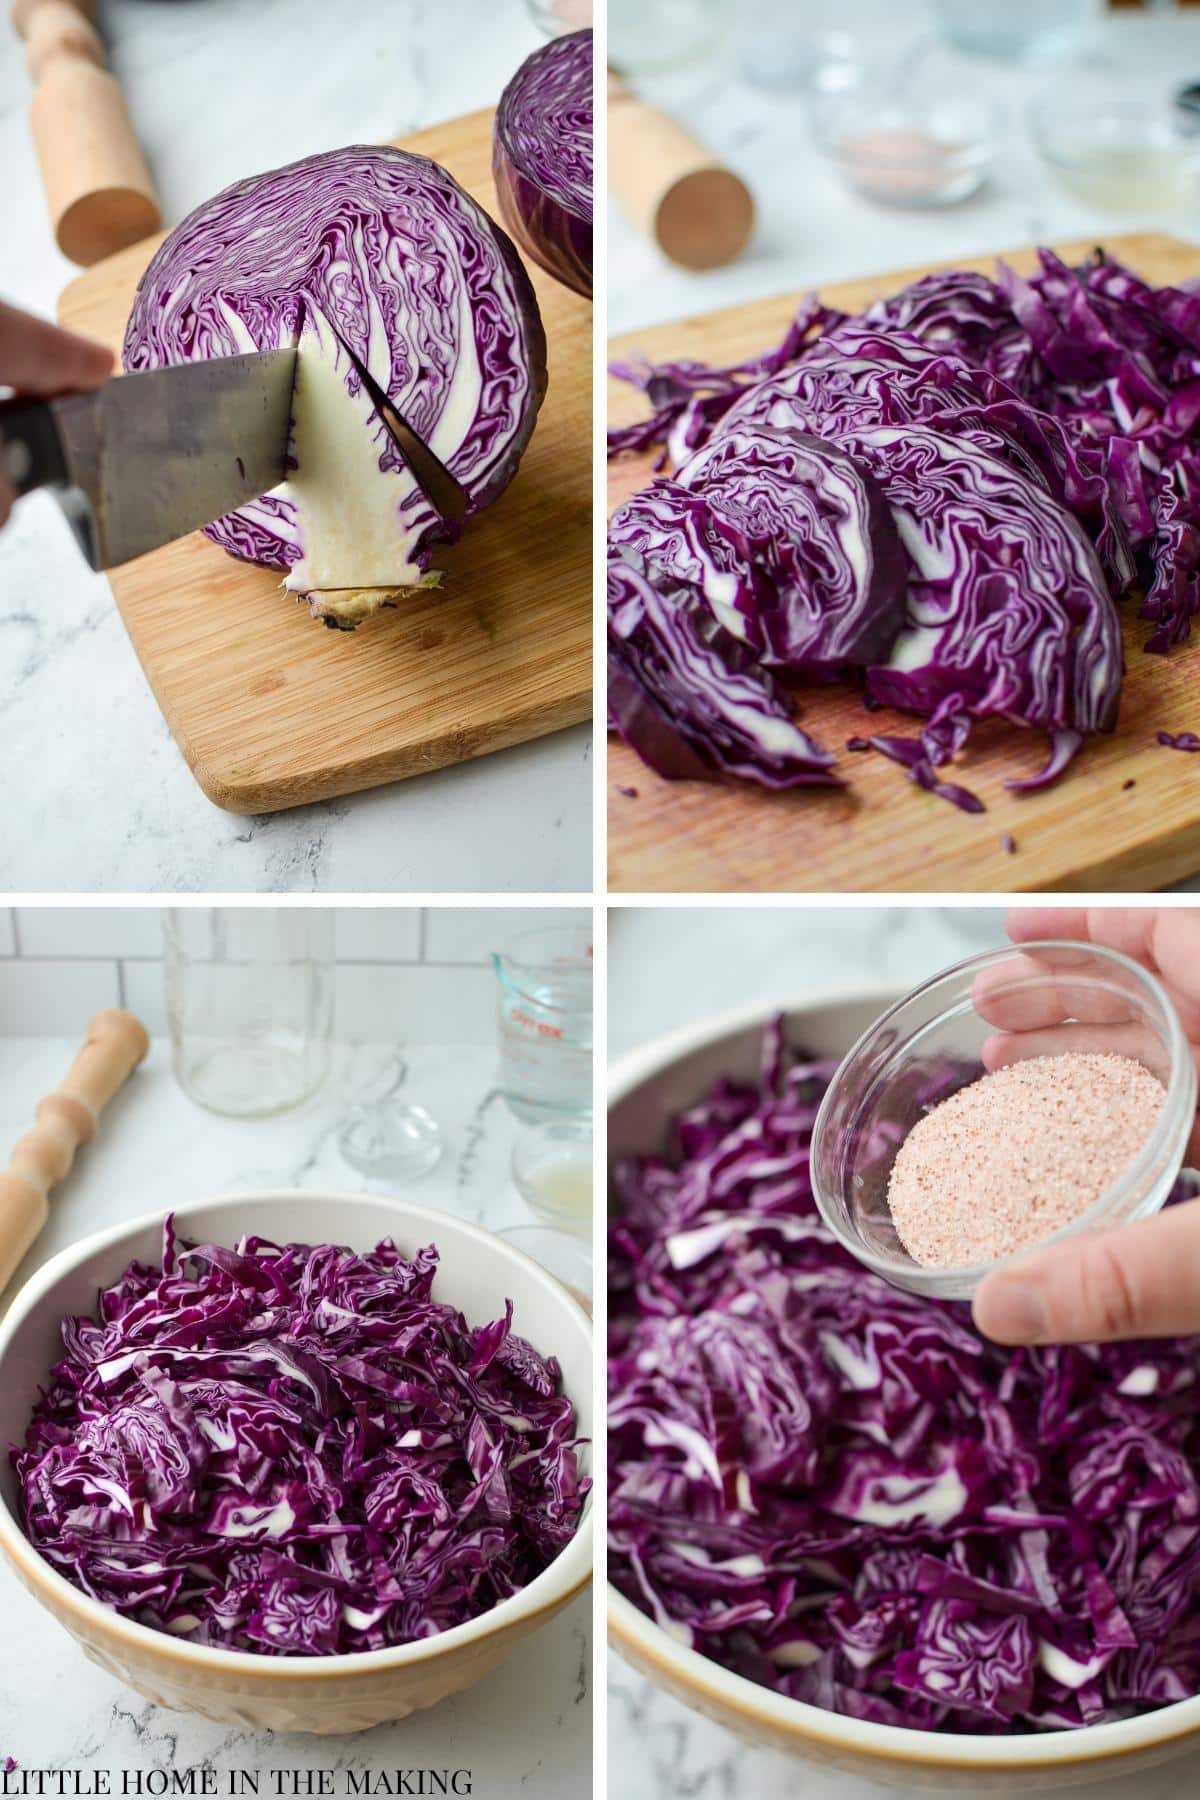 Shredding cabbage and adding salt to it.